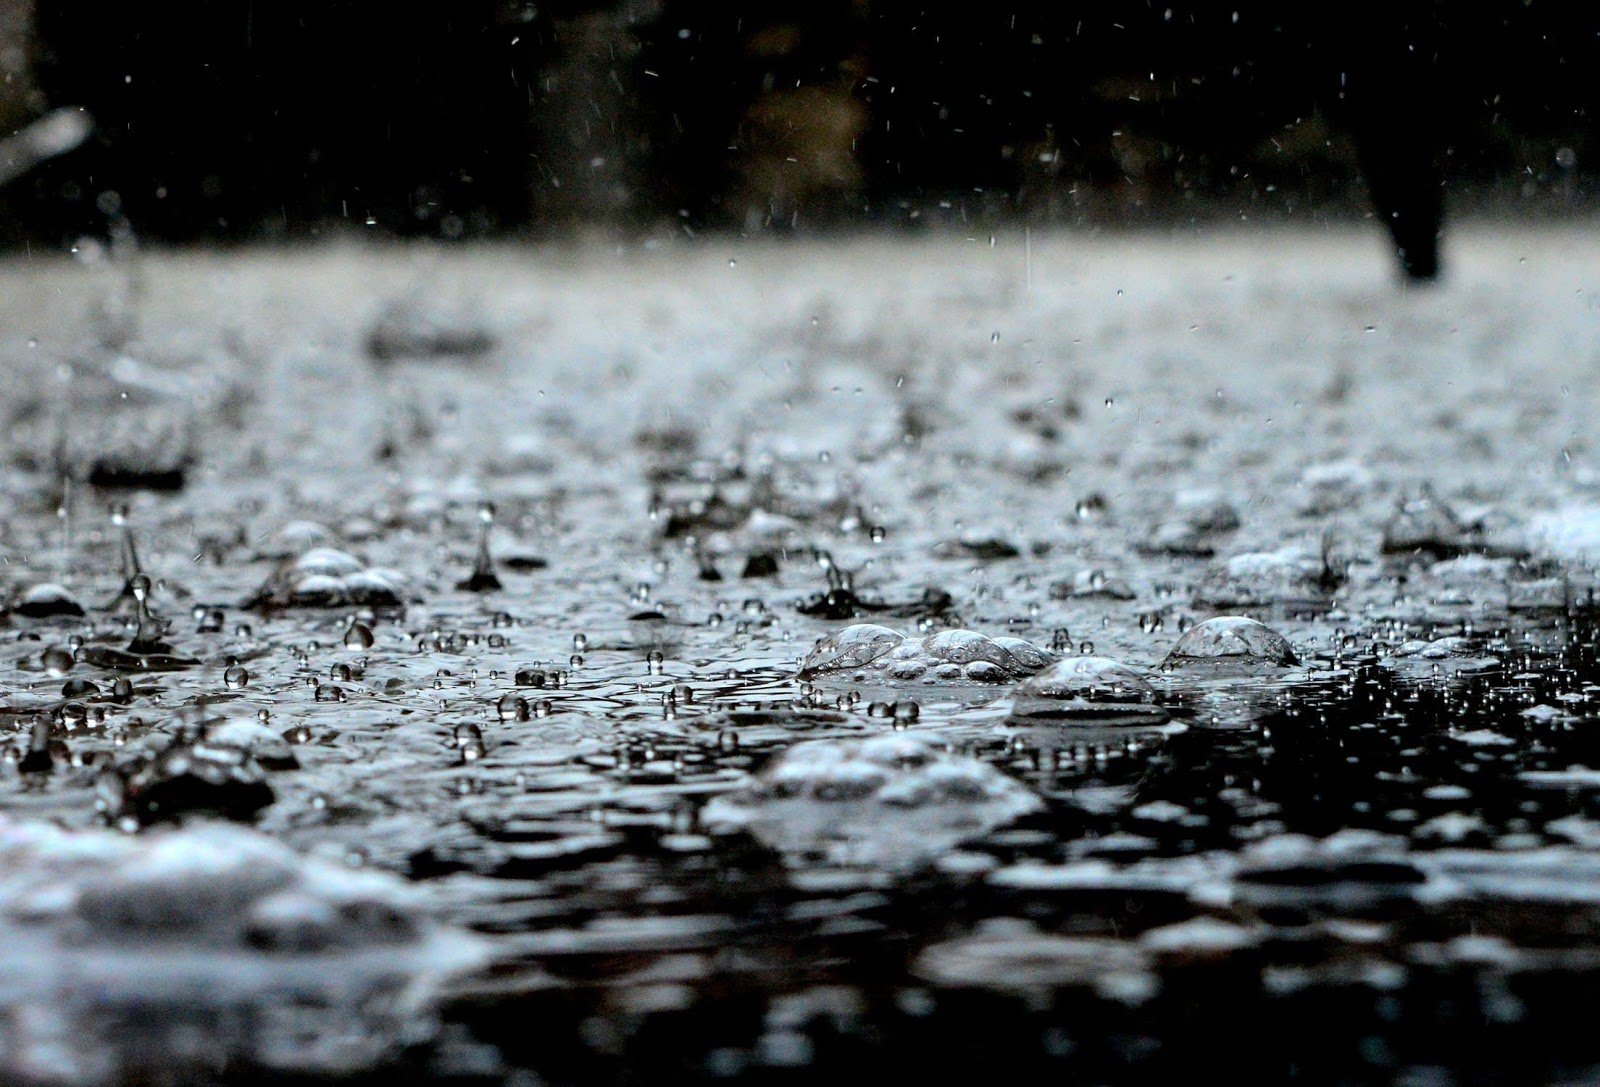 Rain falling on the ground